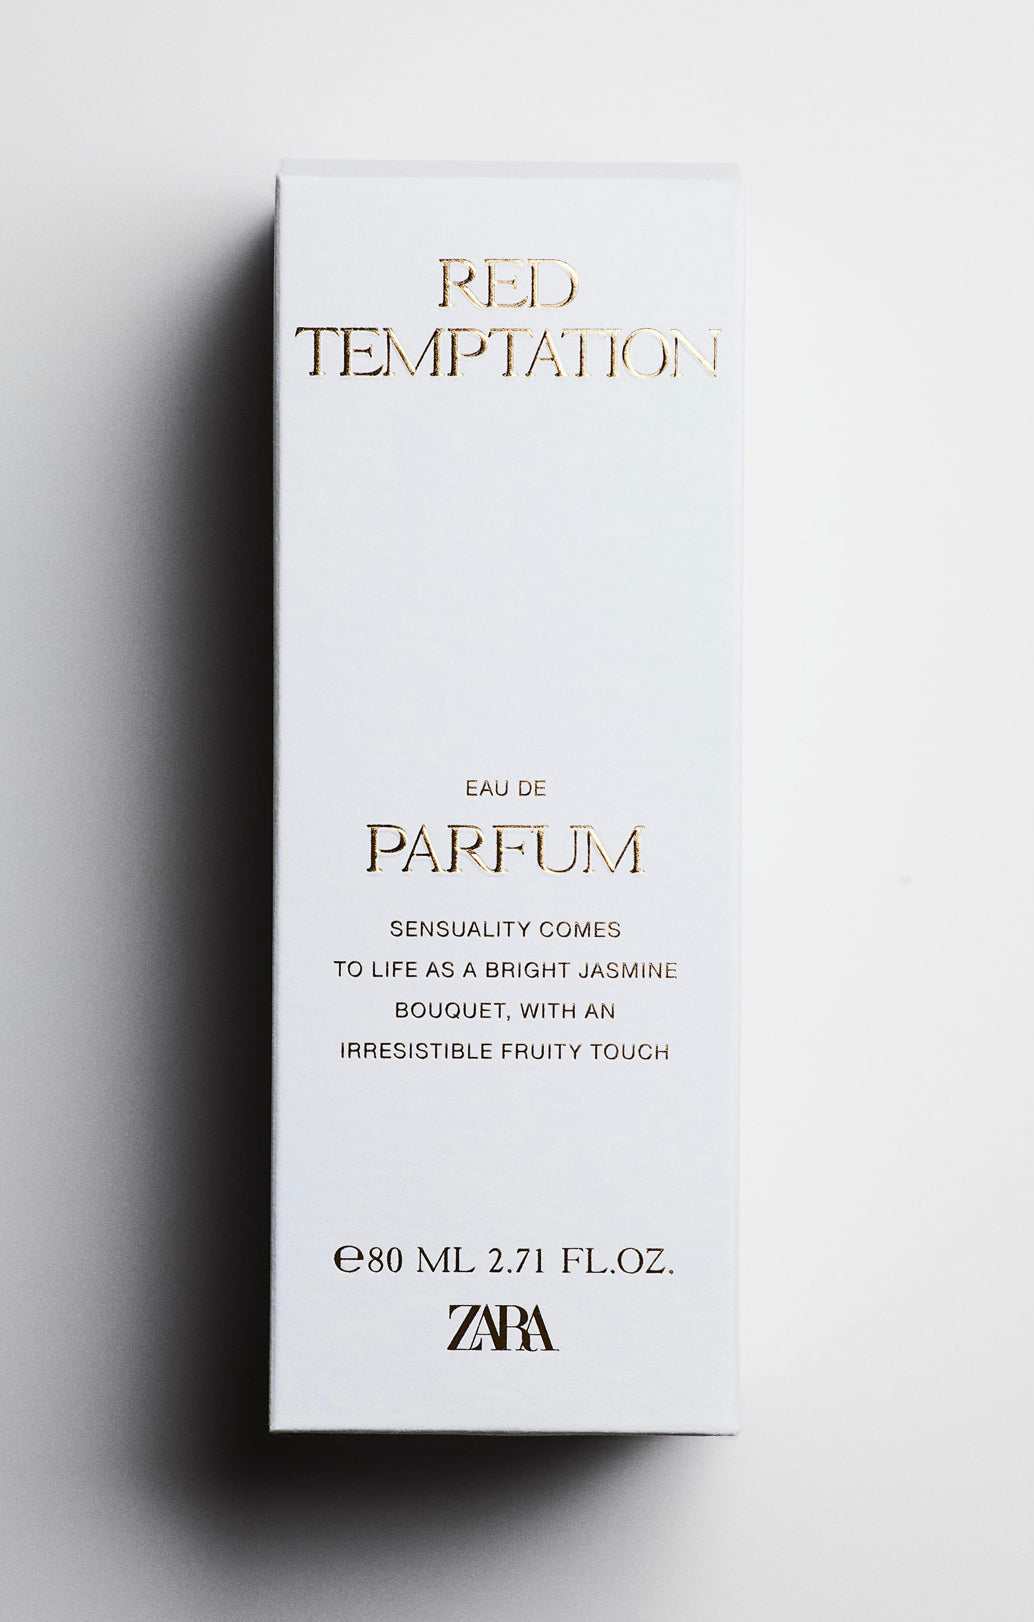 Zara Red Temptation Summer Perfume for Women EDP Eau de Parfum 80 ml (2.71 fl. oz)